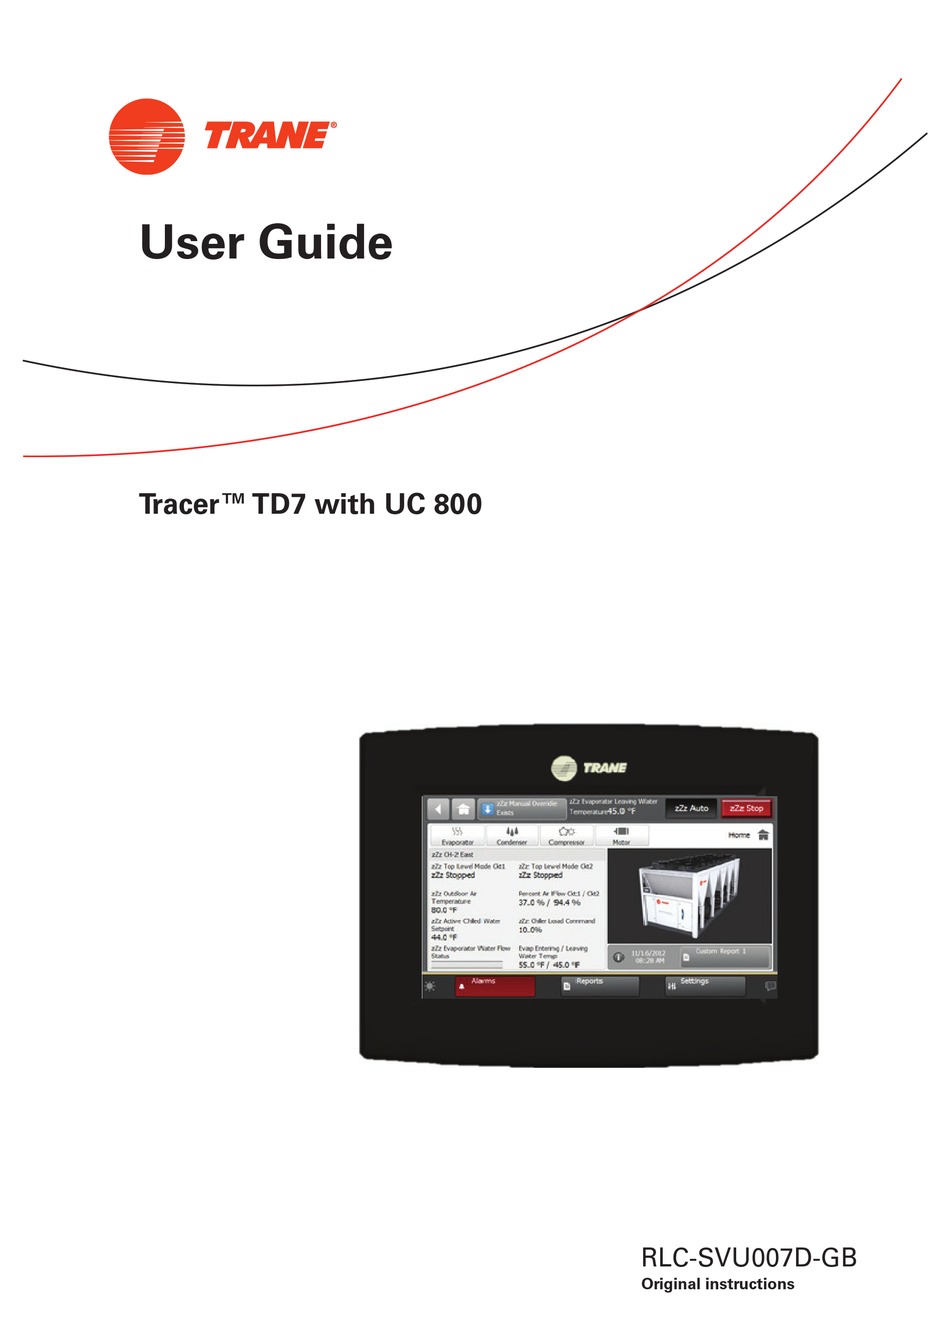 TRANE TRACER TD7 USER MANUAL Pdf Download | ManualsLib